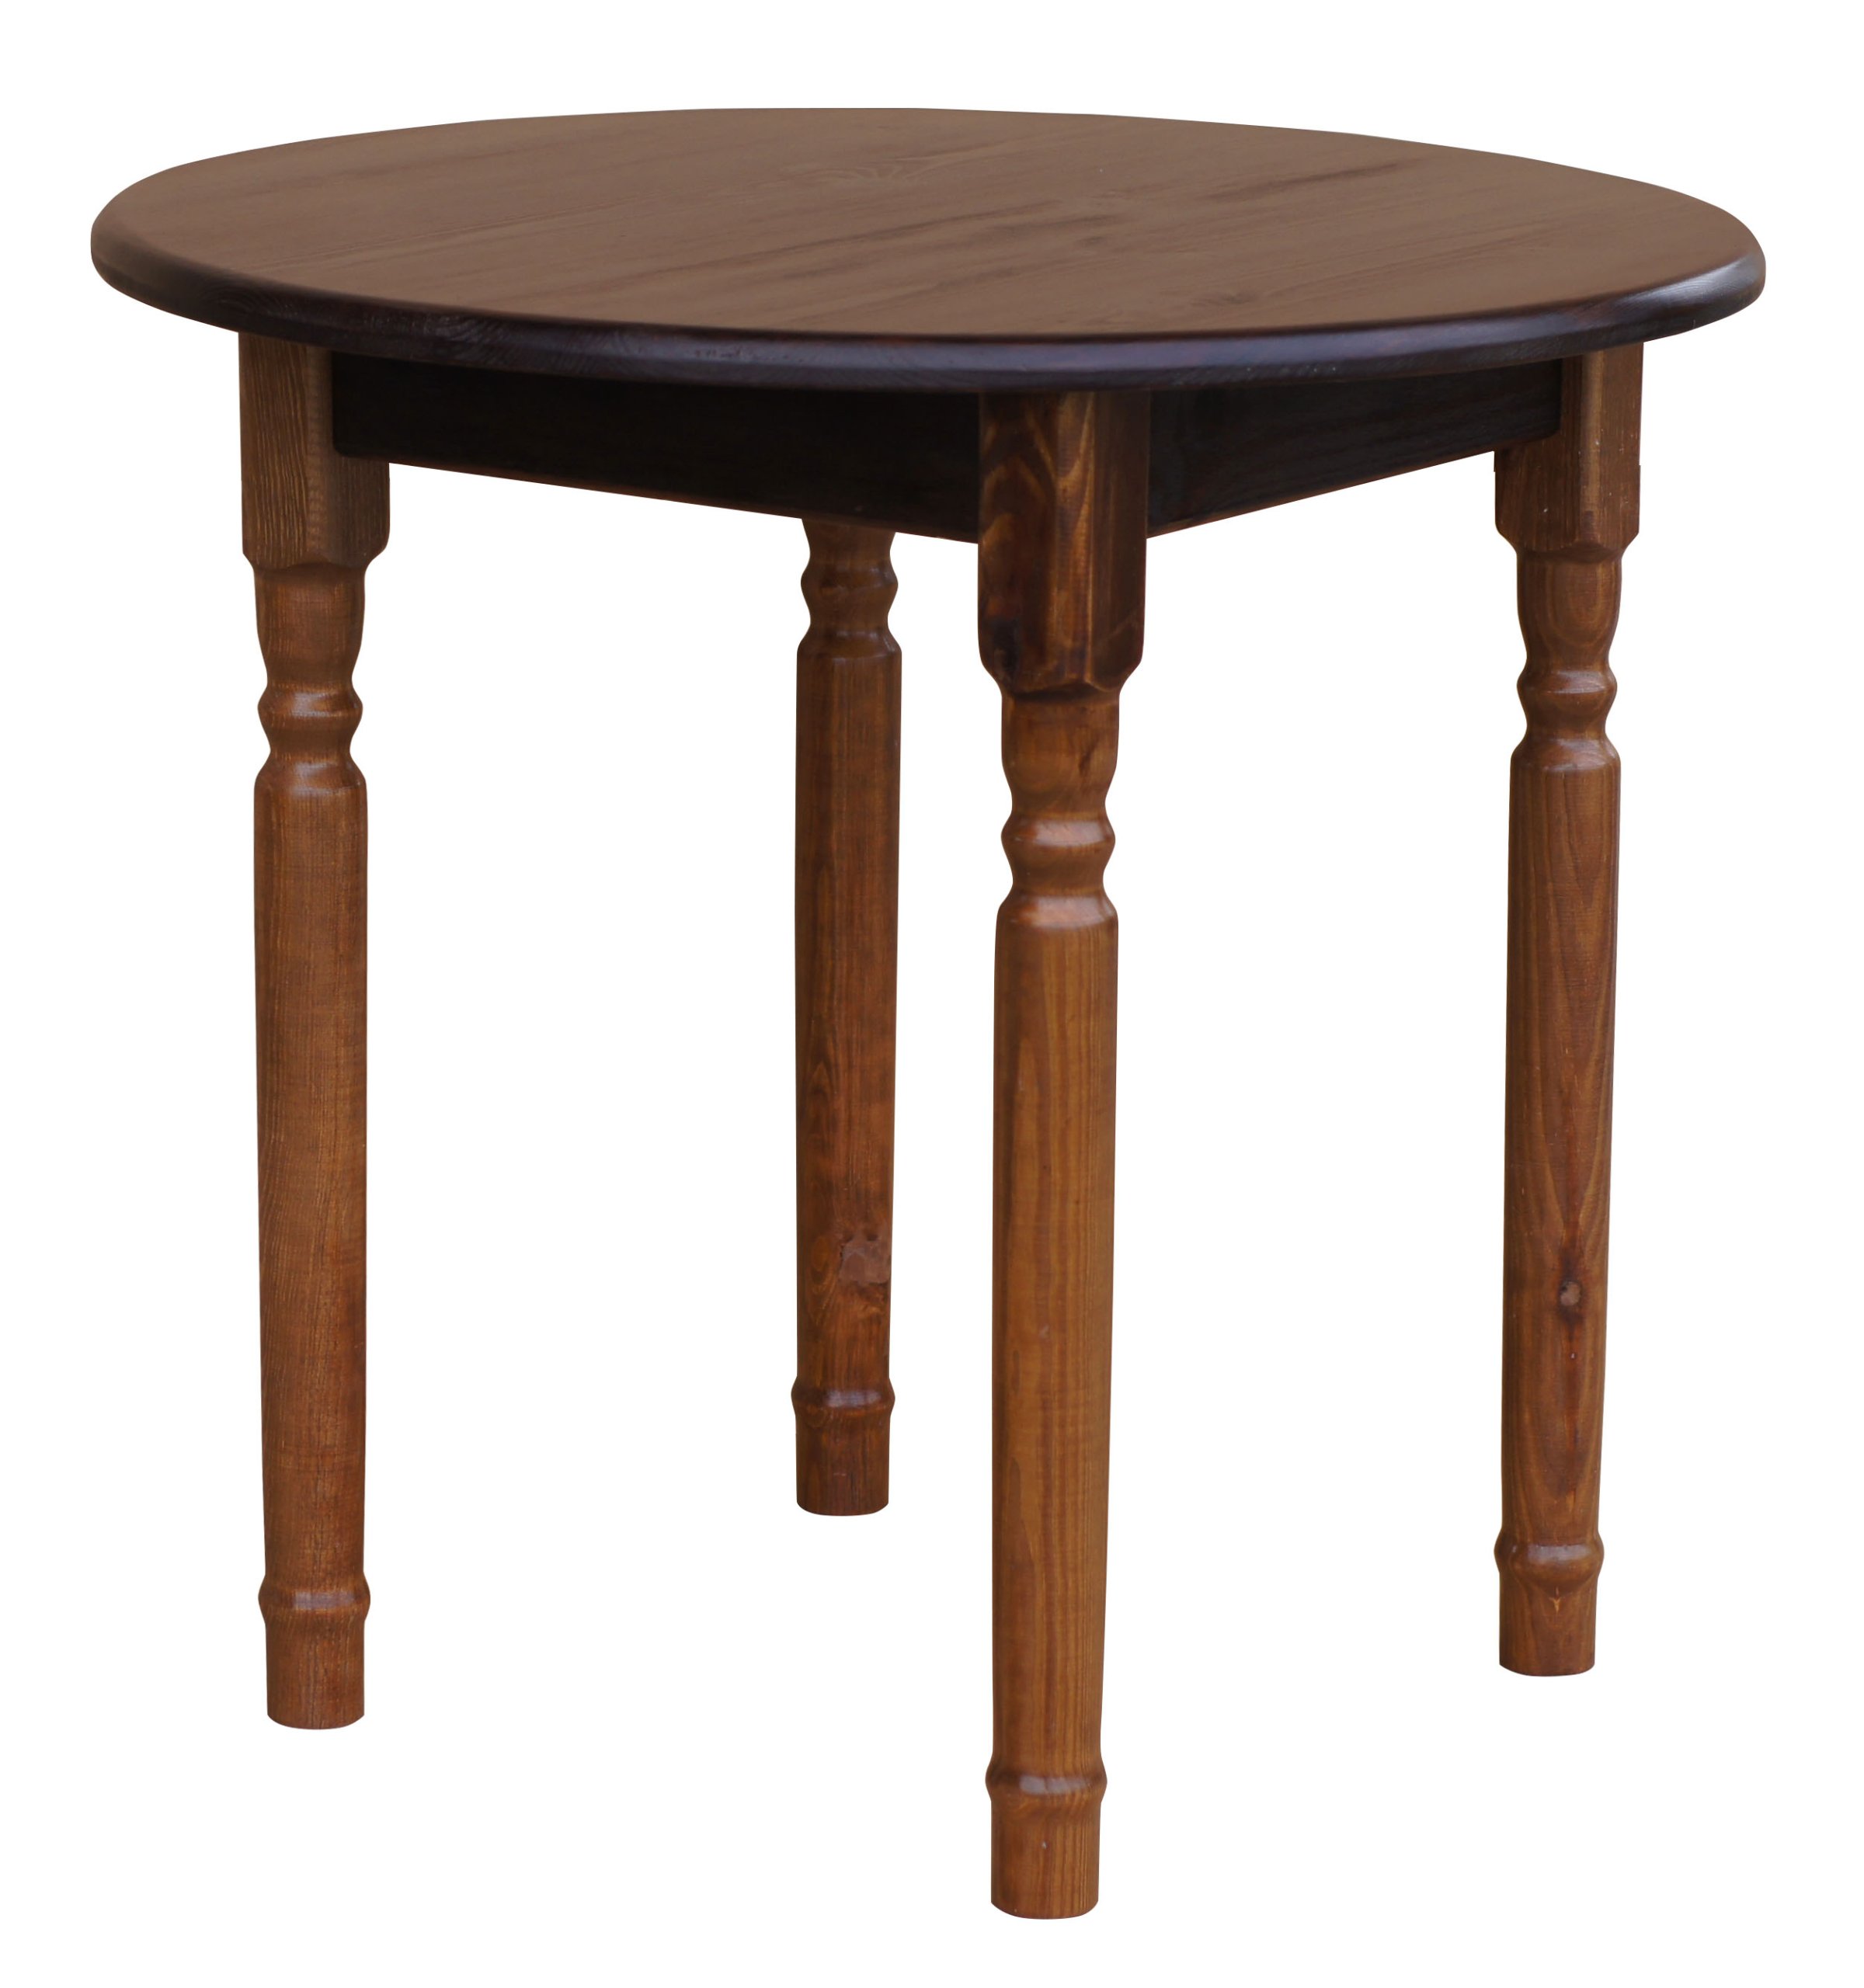 Круглый деревянный стол